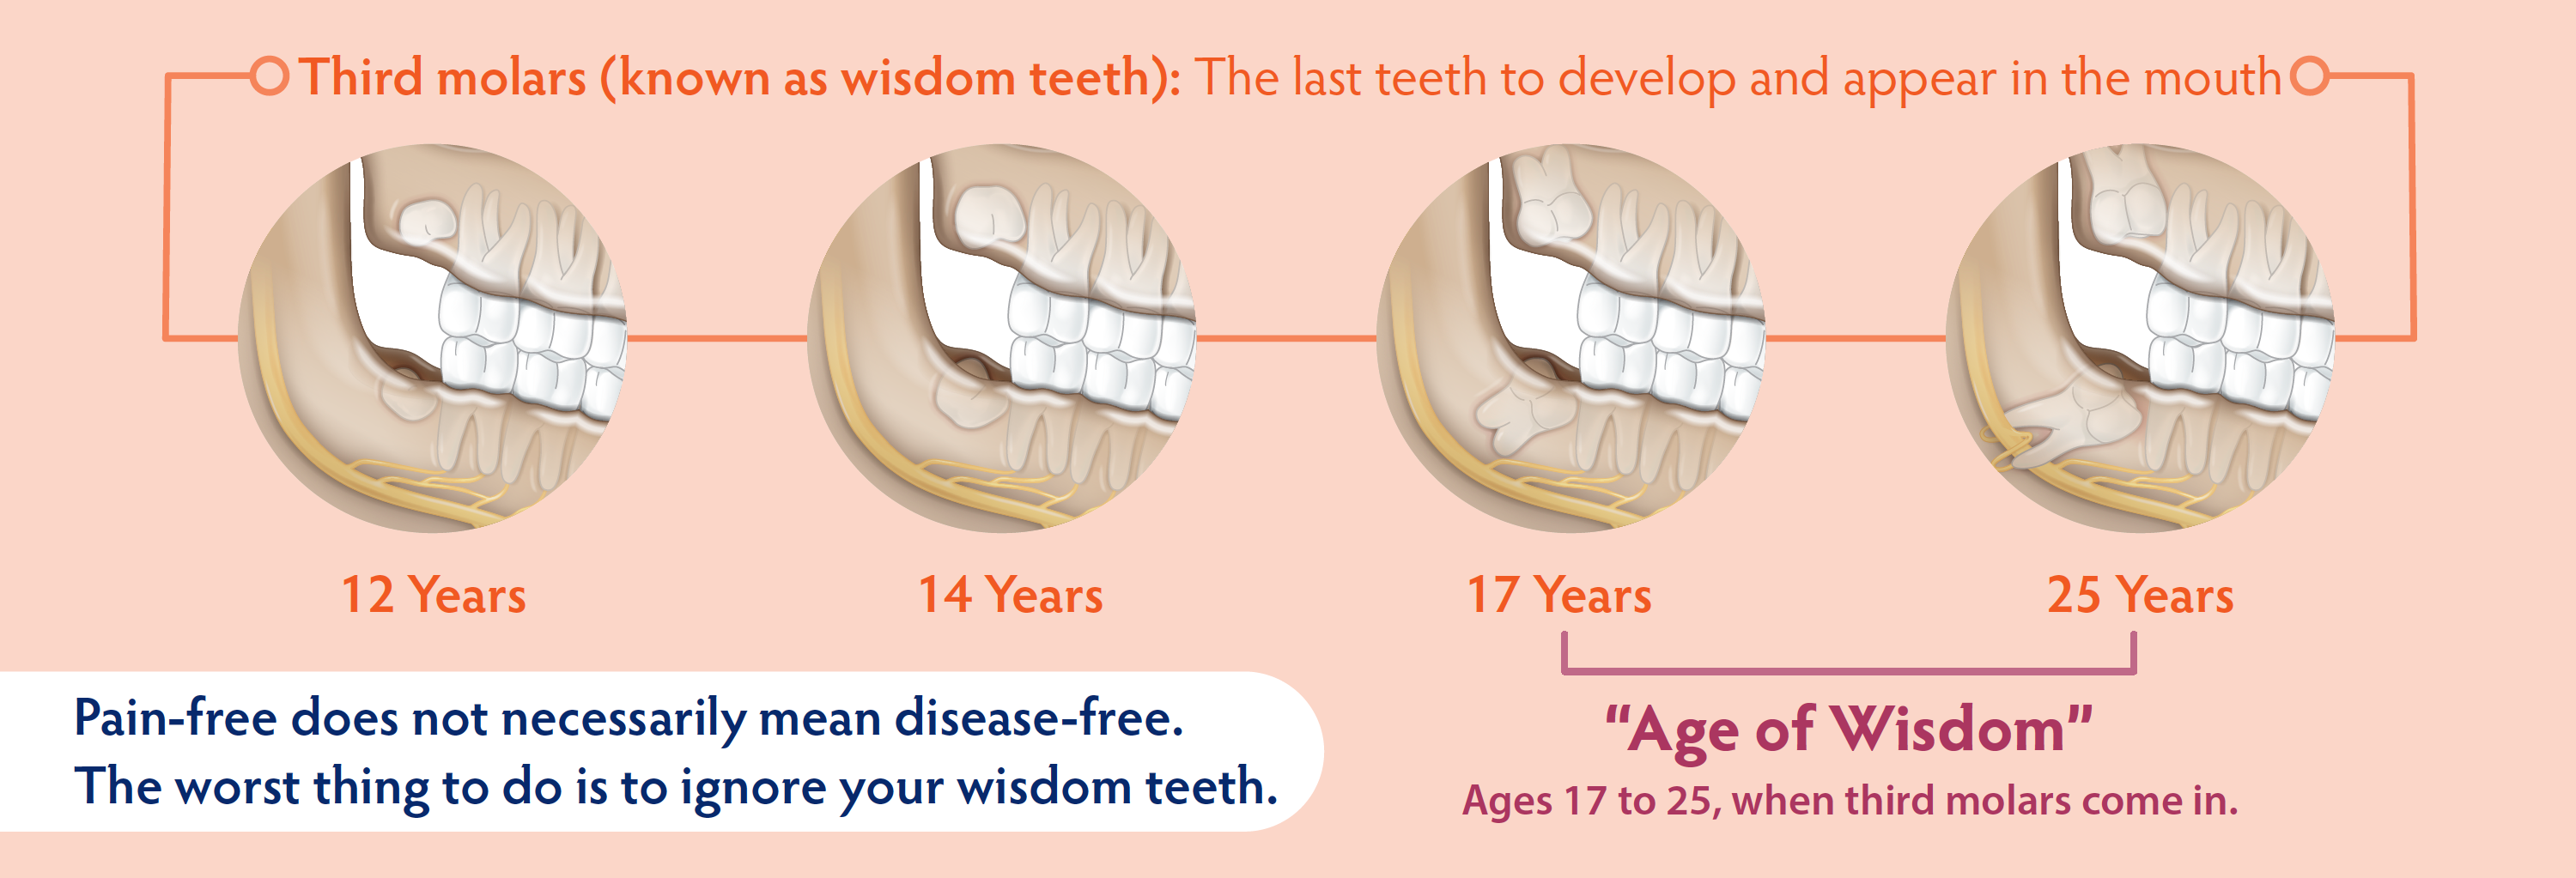 third molars progression by age